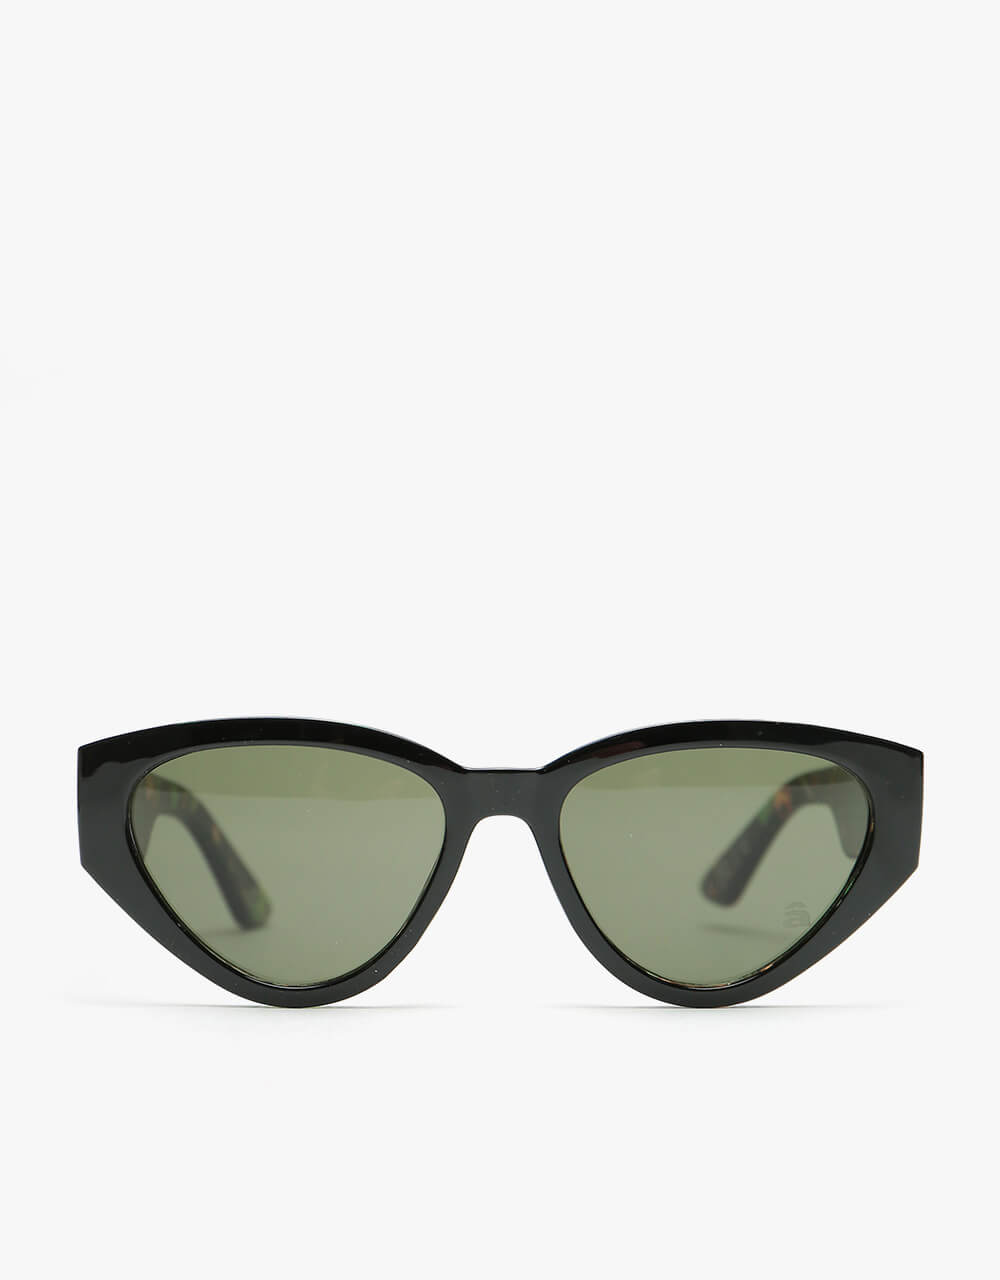 Szade Kershaw Recycled Sunglasses - Elysium Black/Collard Green/Moss